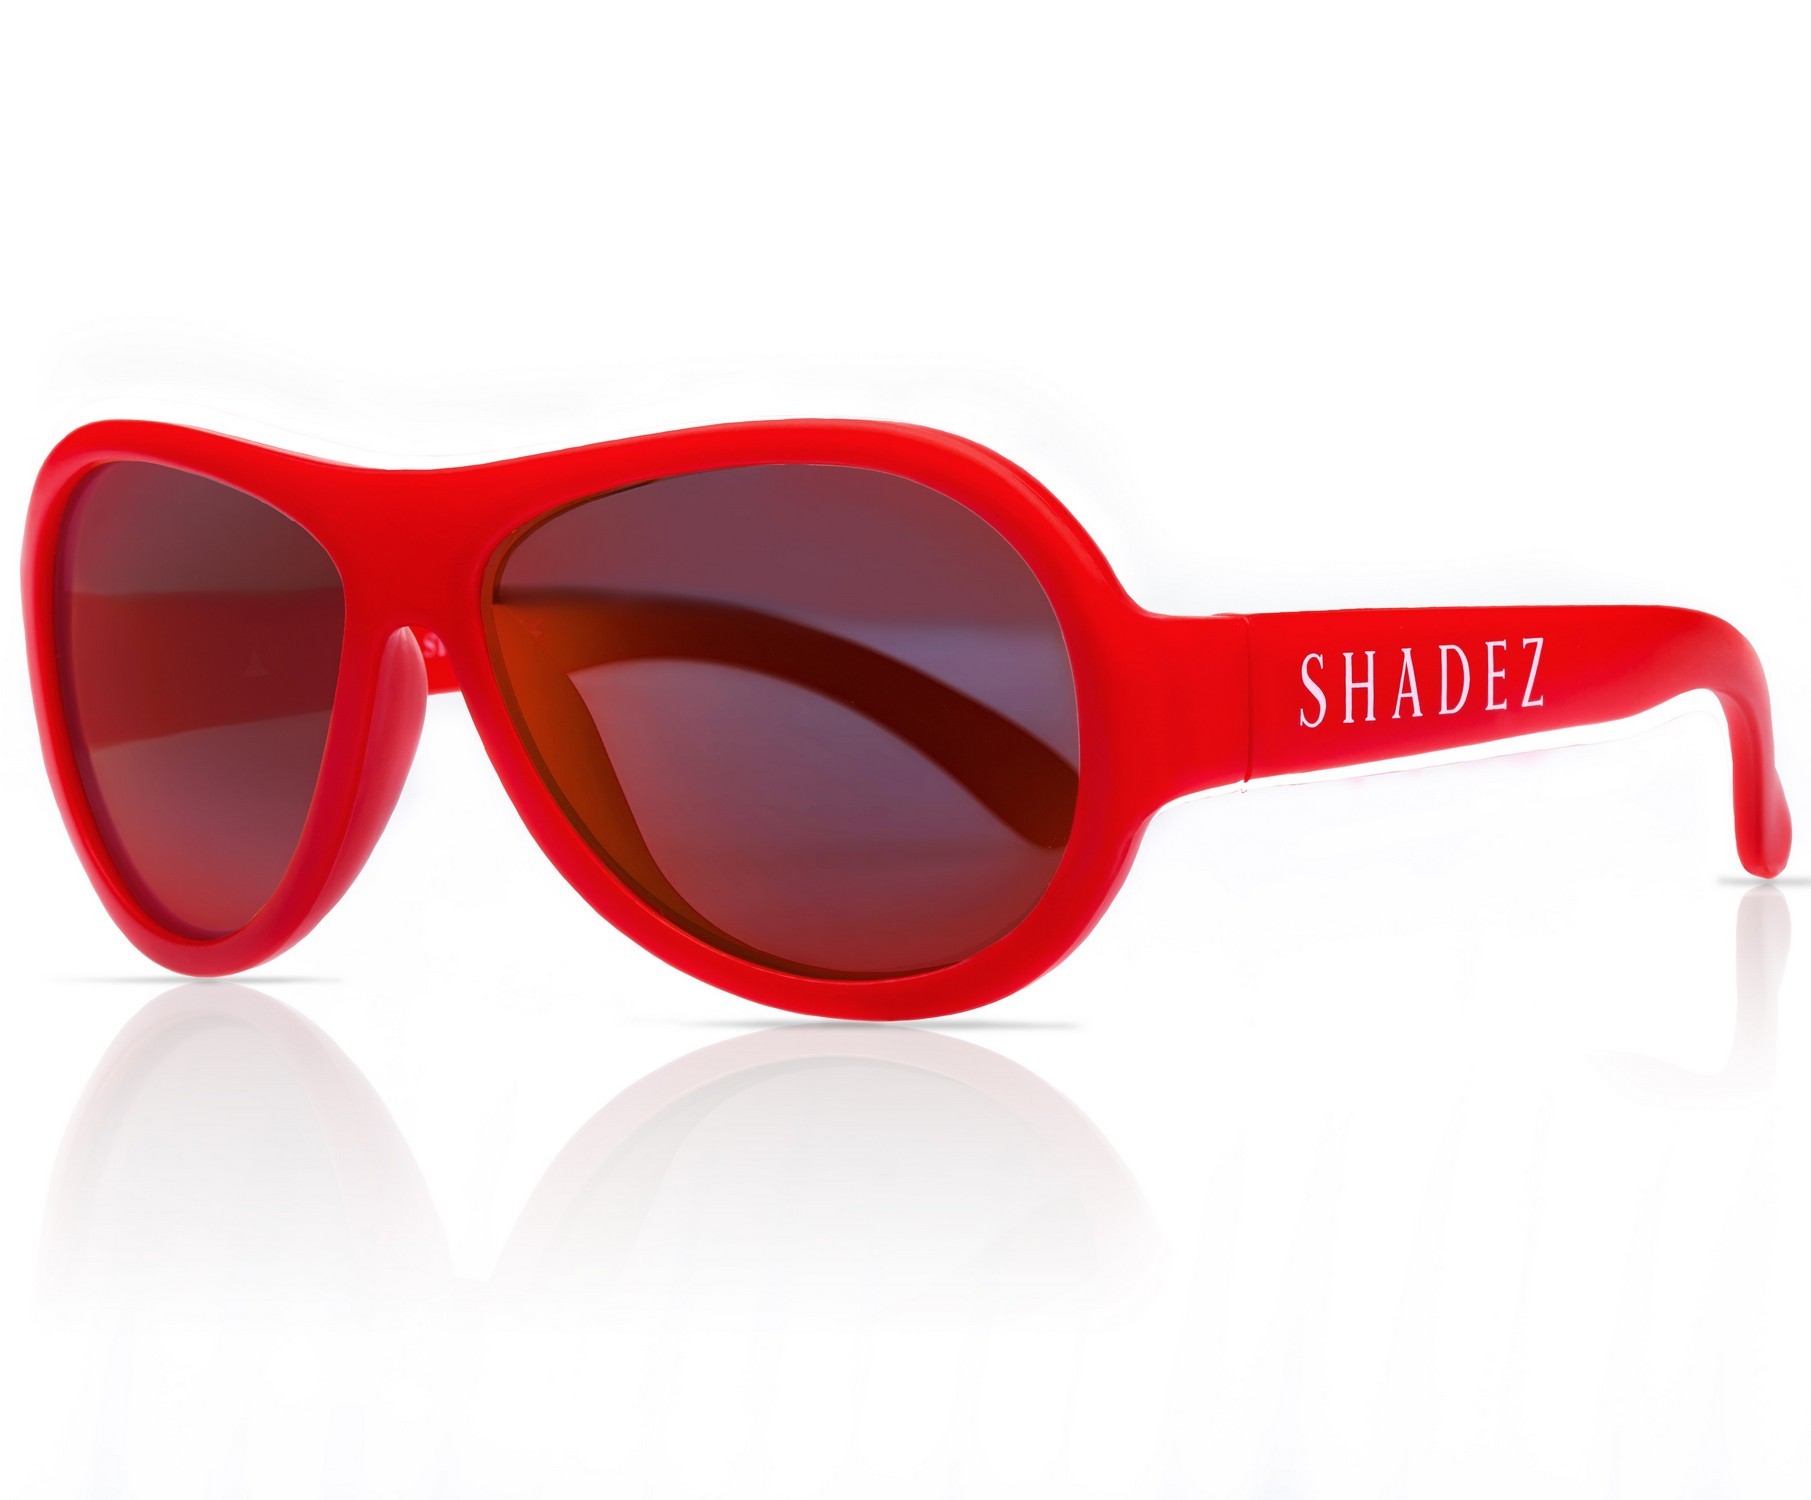 Shadez - UV sunglasses for kids - Classics - Red